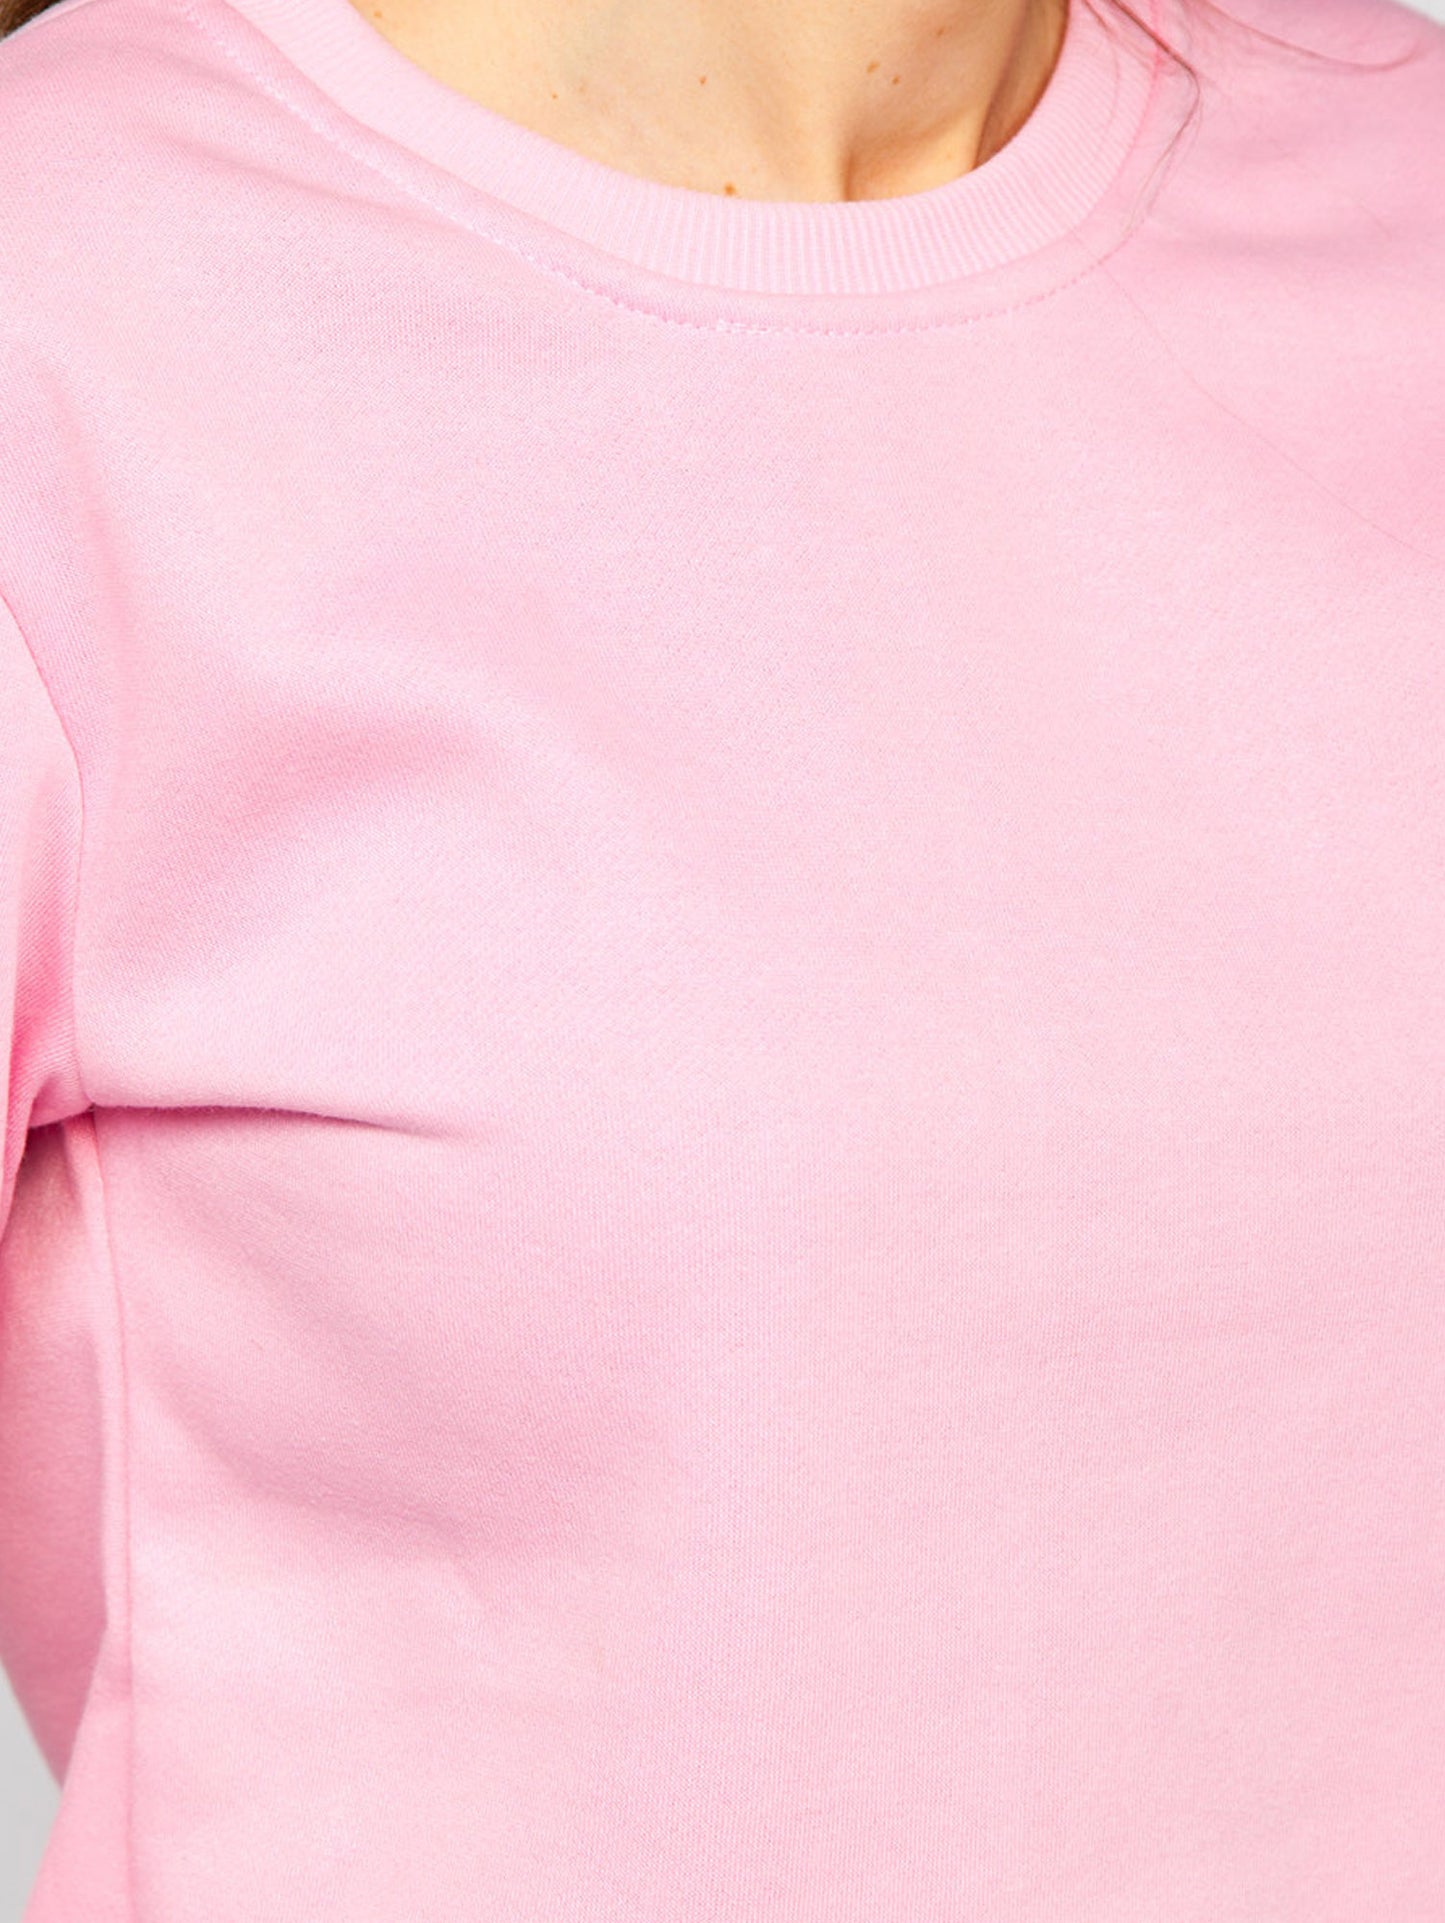 Women's Basic Pink Sweatshirt